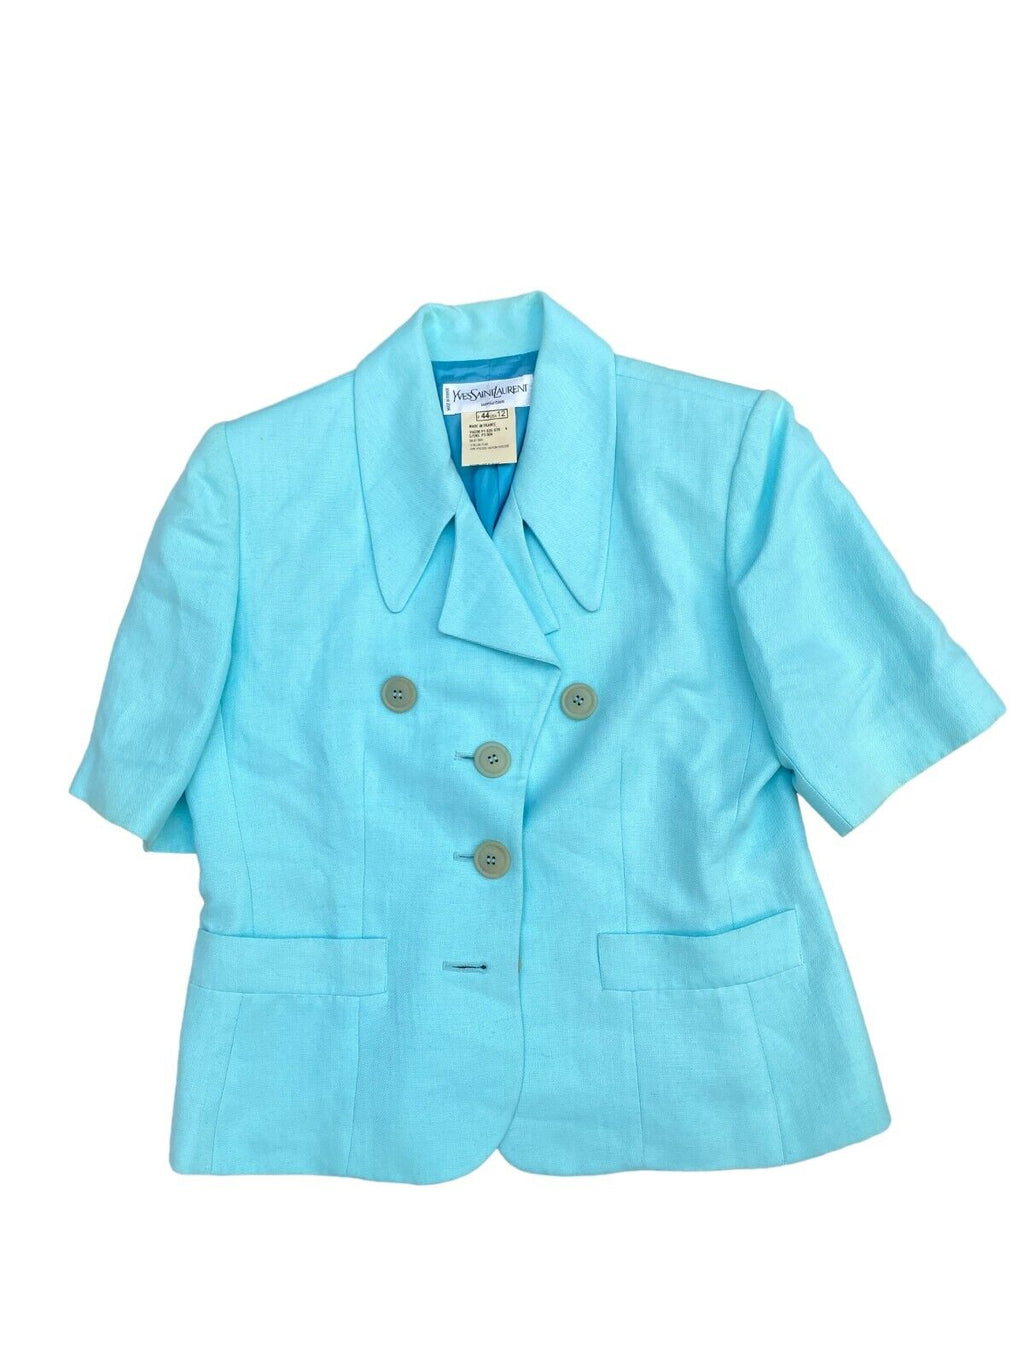 Blue blazer jacket  Size FR 44 US 12  fits M